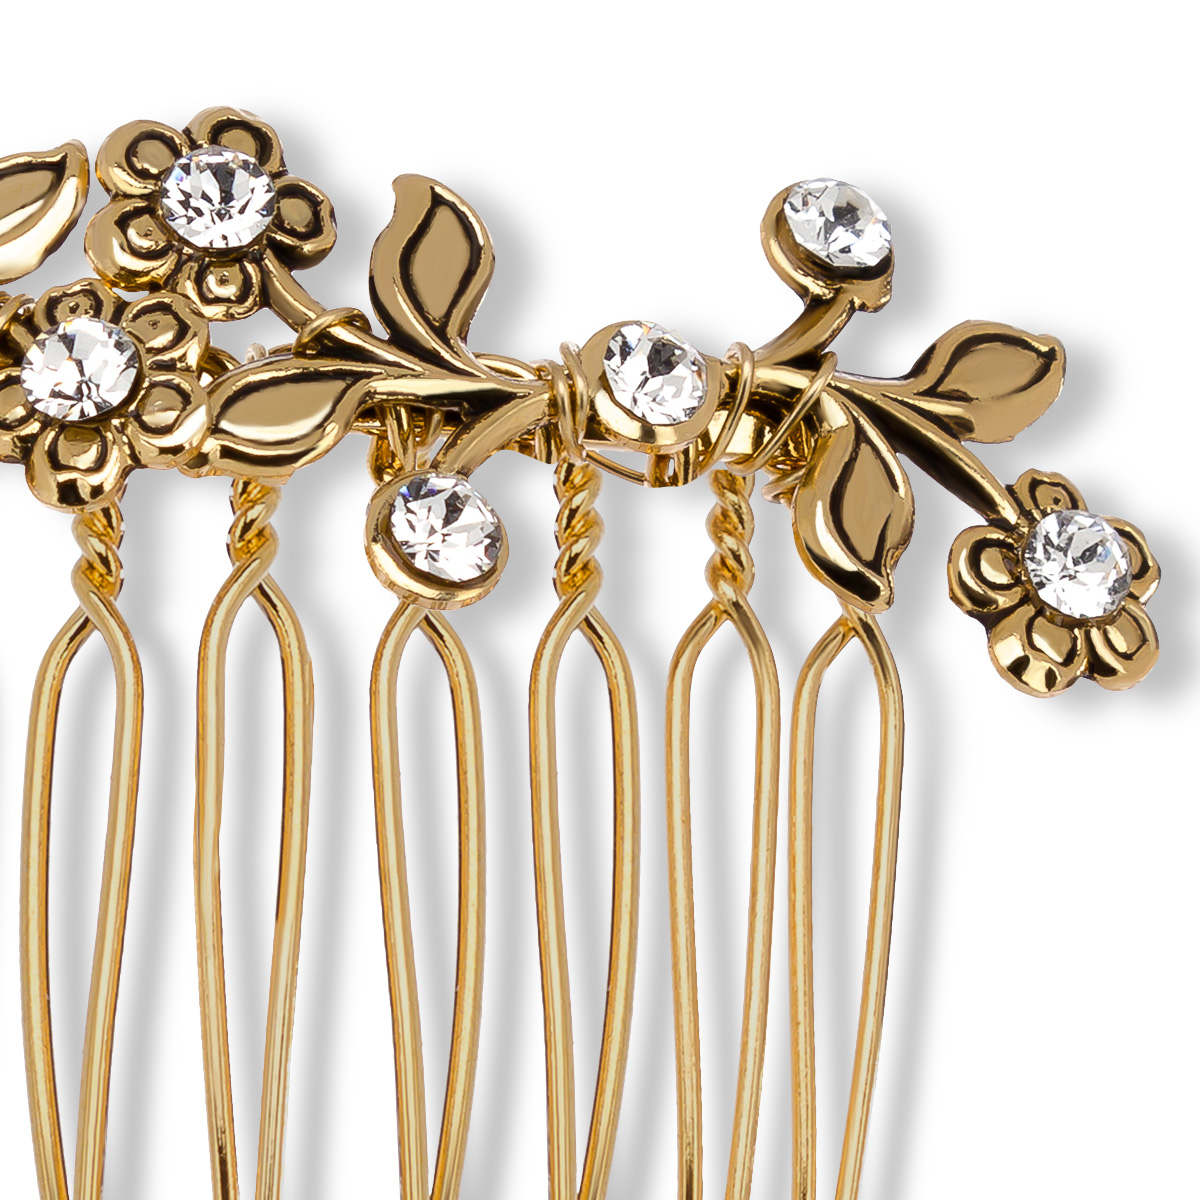 Chelsea Comb - Gold - Ellen Hunter NYC - Luxury Bridal Jewelry